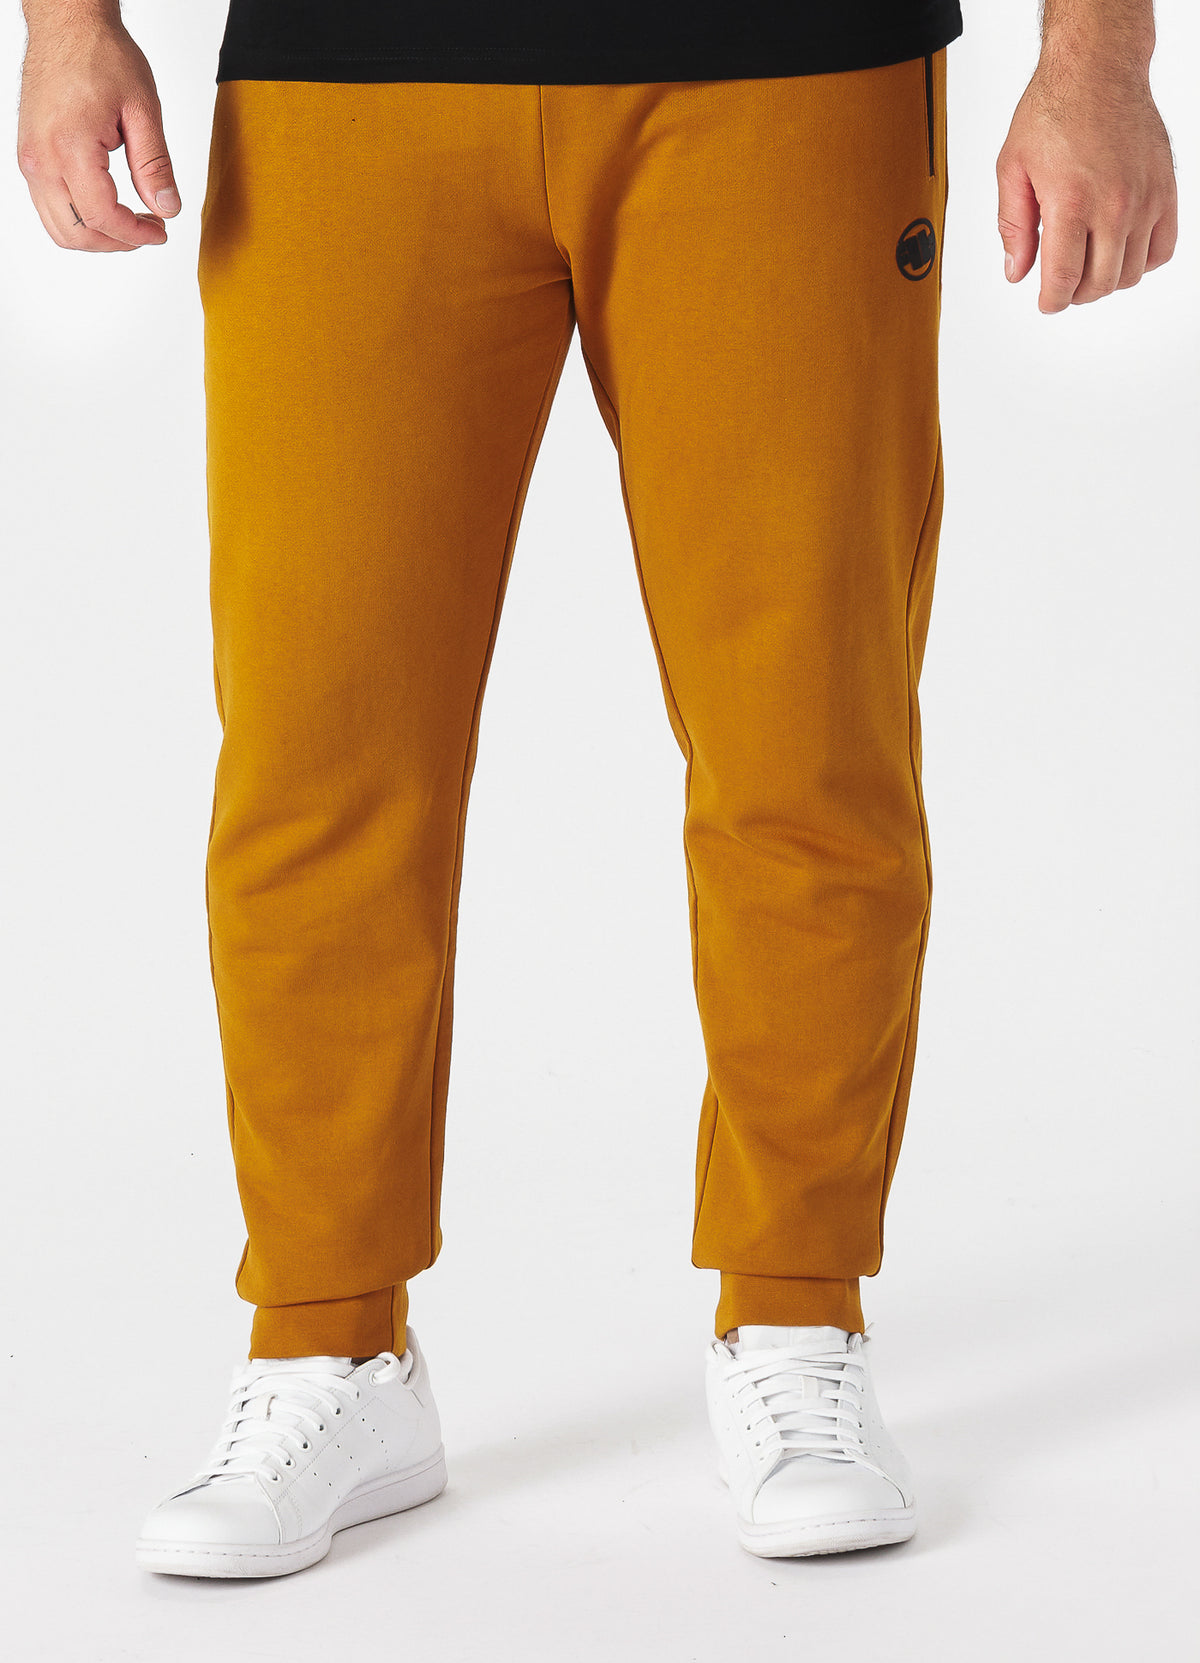 TERRY NEW LOGO Honey Yellow Track Pants - Pitbull West Coast International Store 